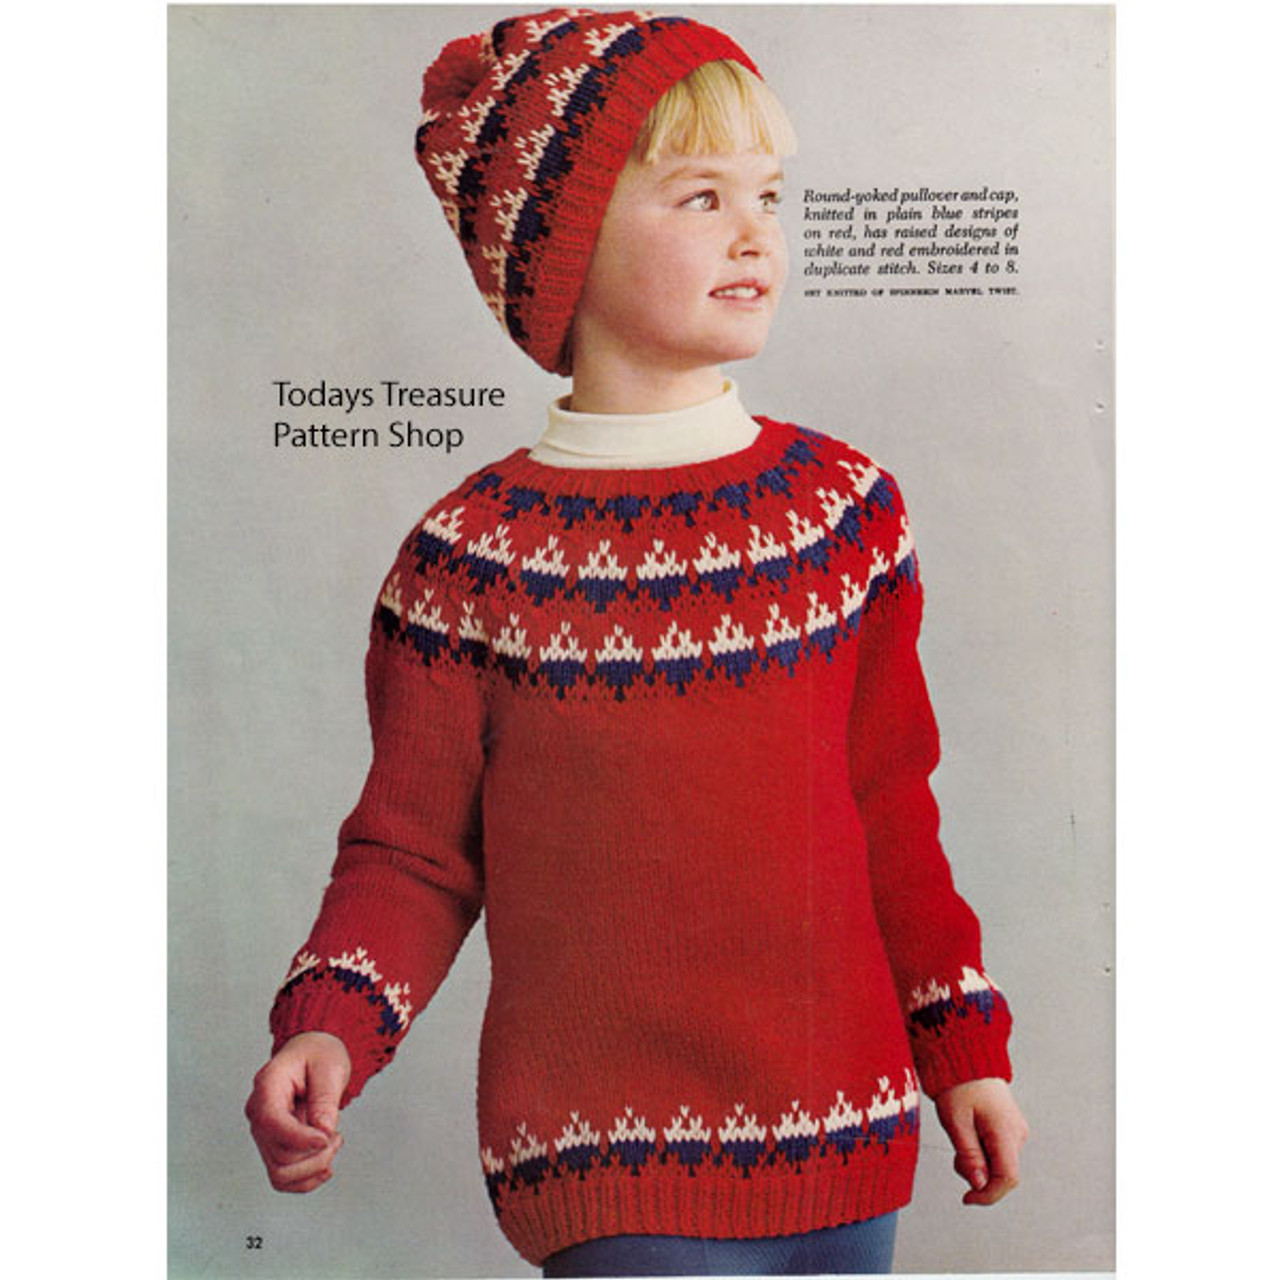 Kids Pullover & Hat Reynolds Yarn Knitting Patterns Set of 2 